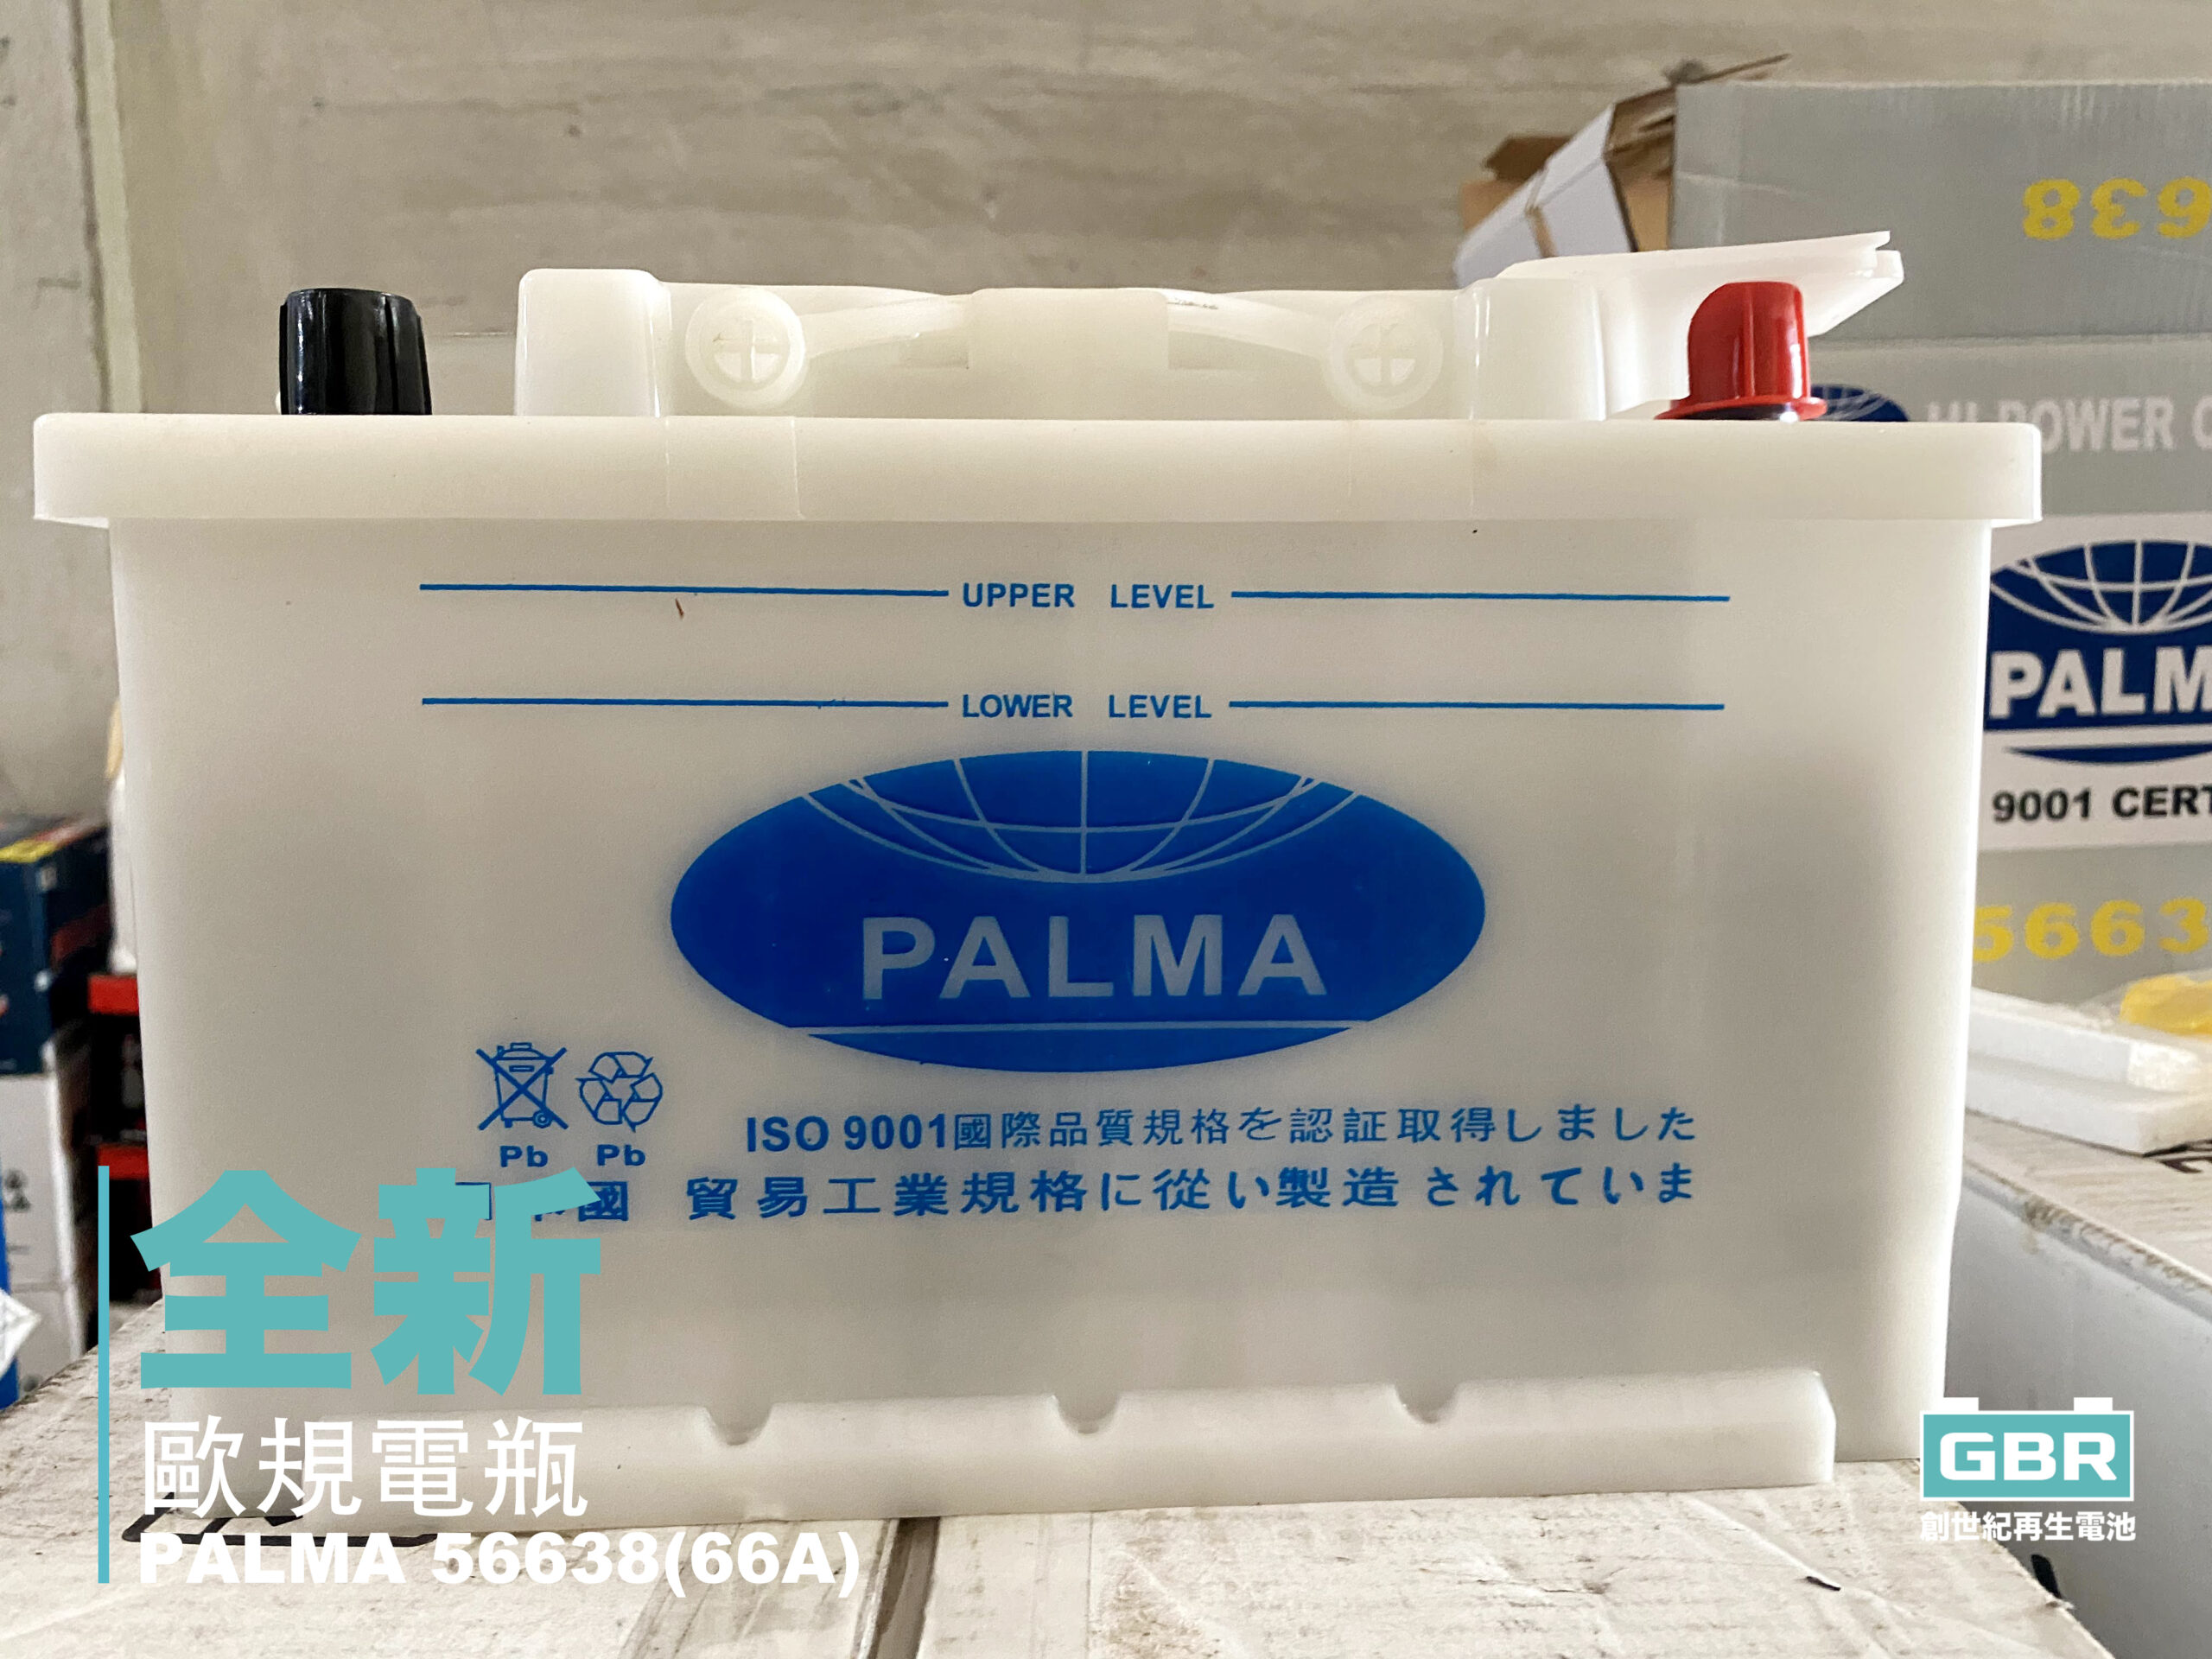 Palma 電瓶(66A歐規，56638)，超級優惠活動